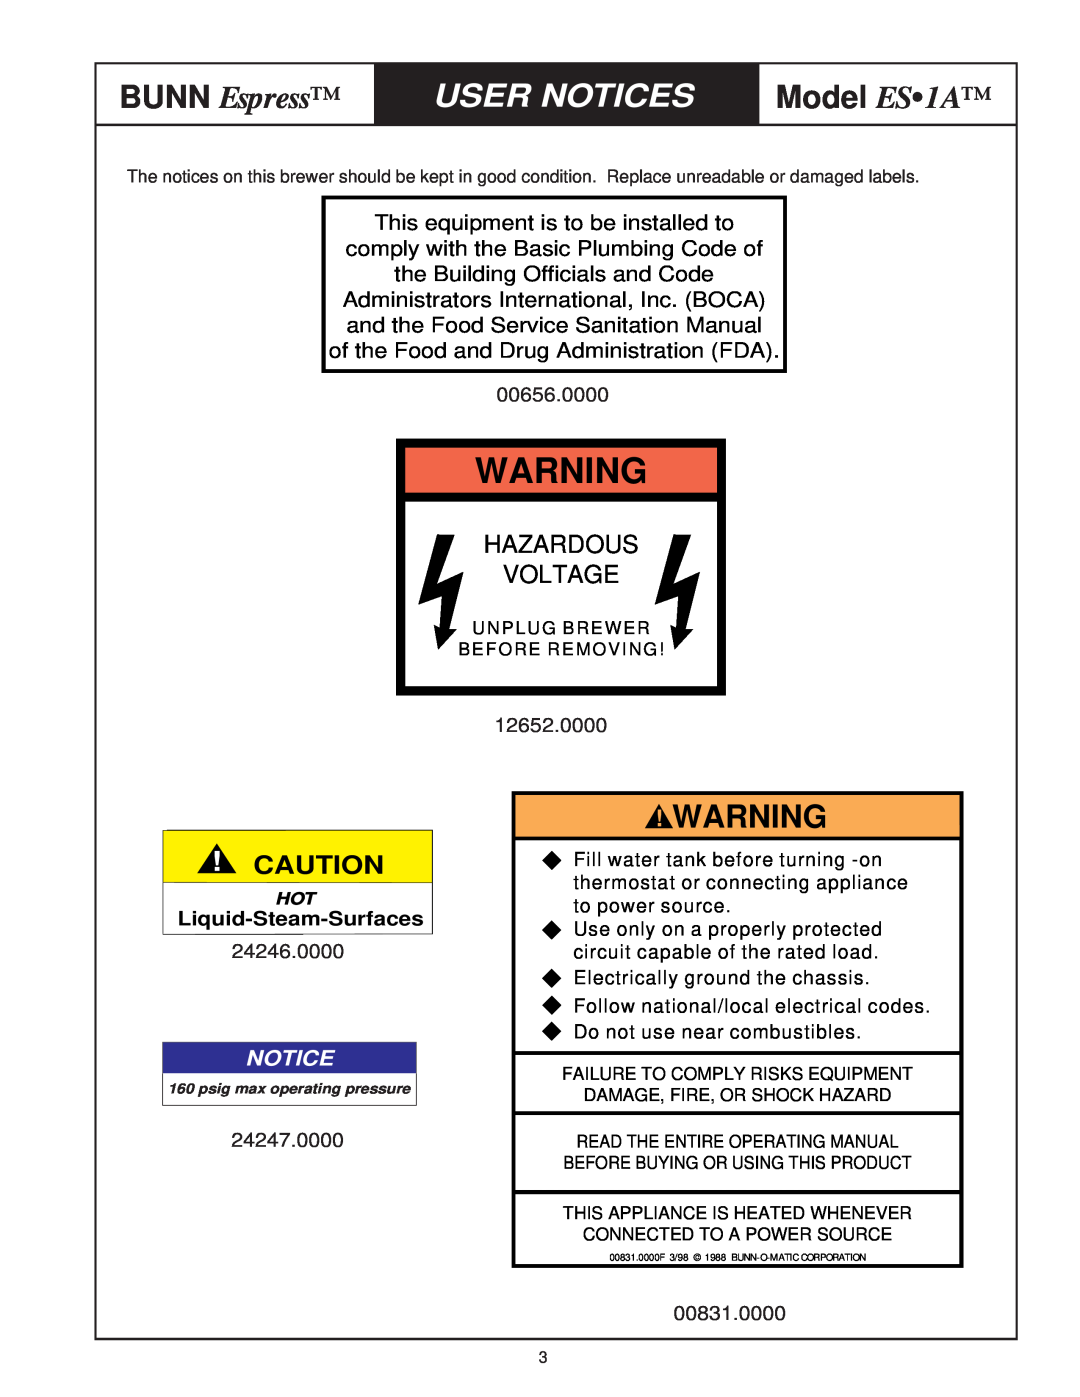 Bunn service manual User Notices, BUNN Espress, Model ES1A, Hazardous Voltage, Liquid-Steam-Surfaces 